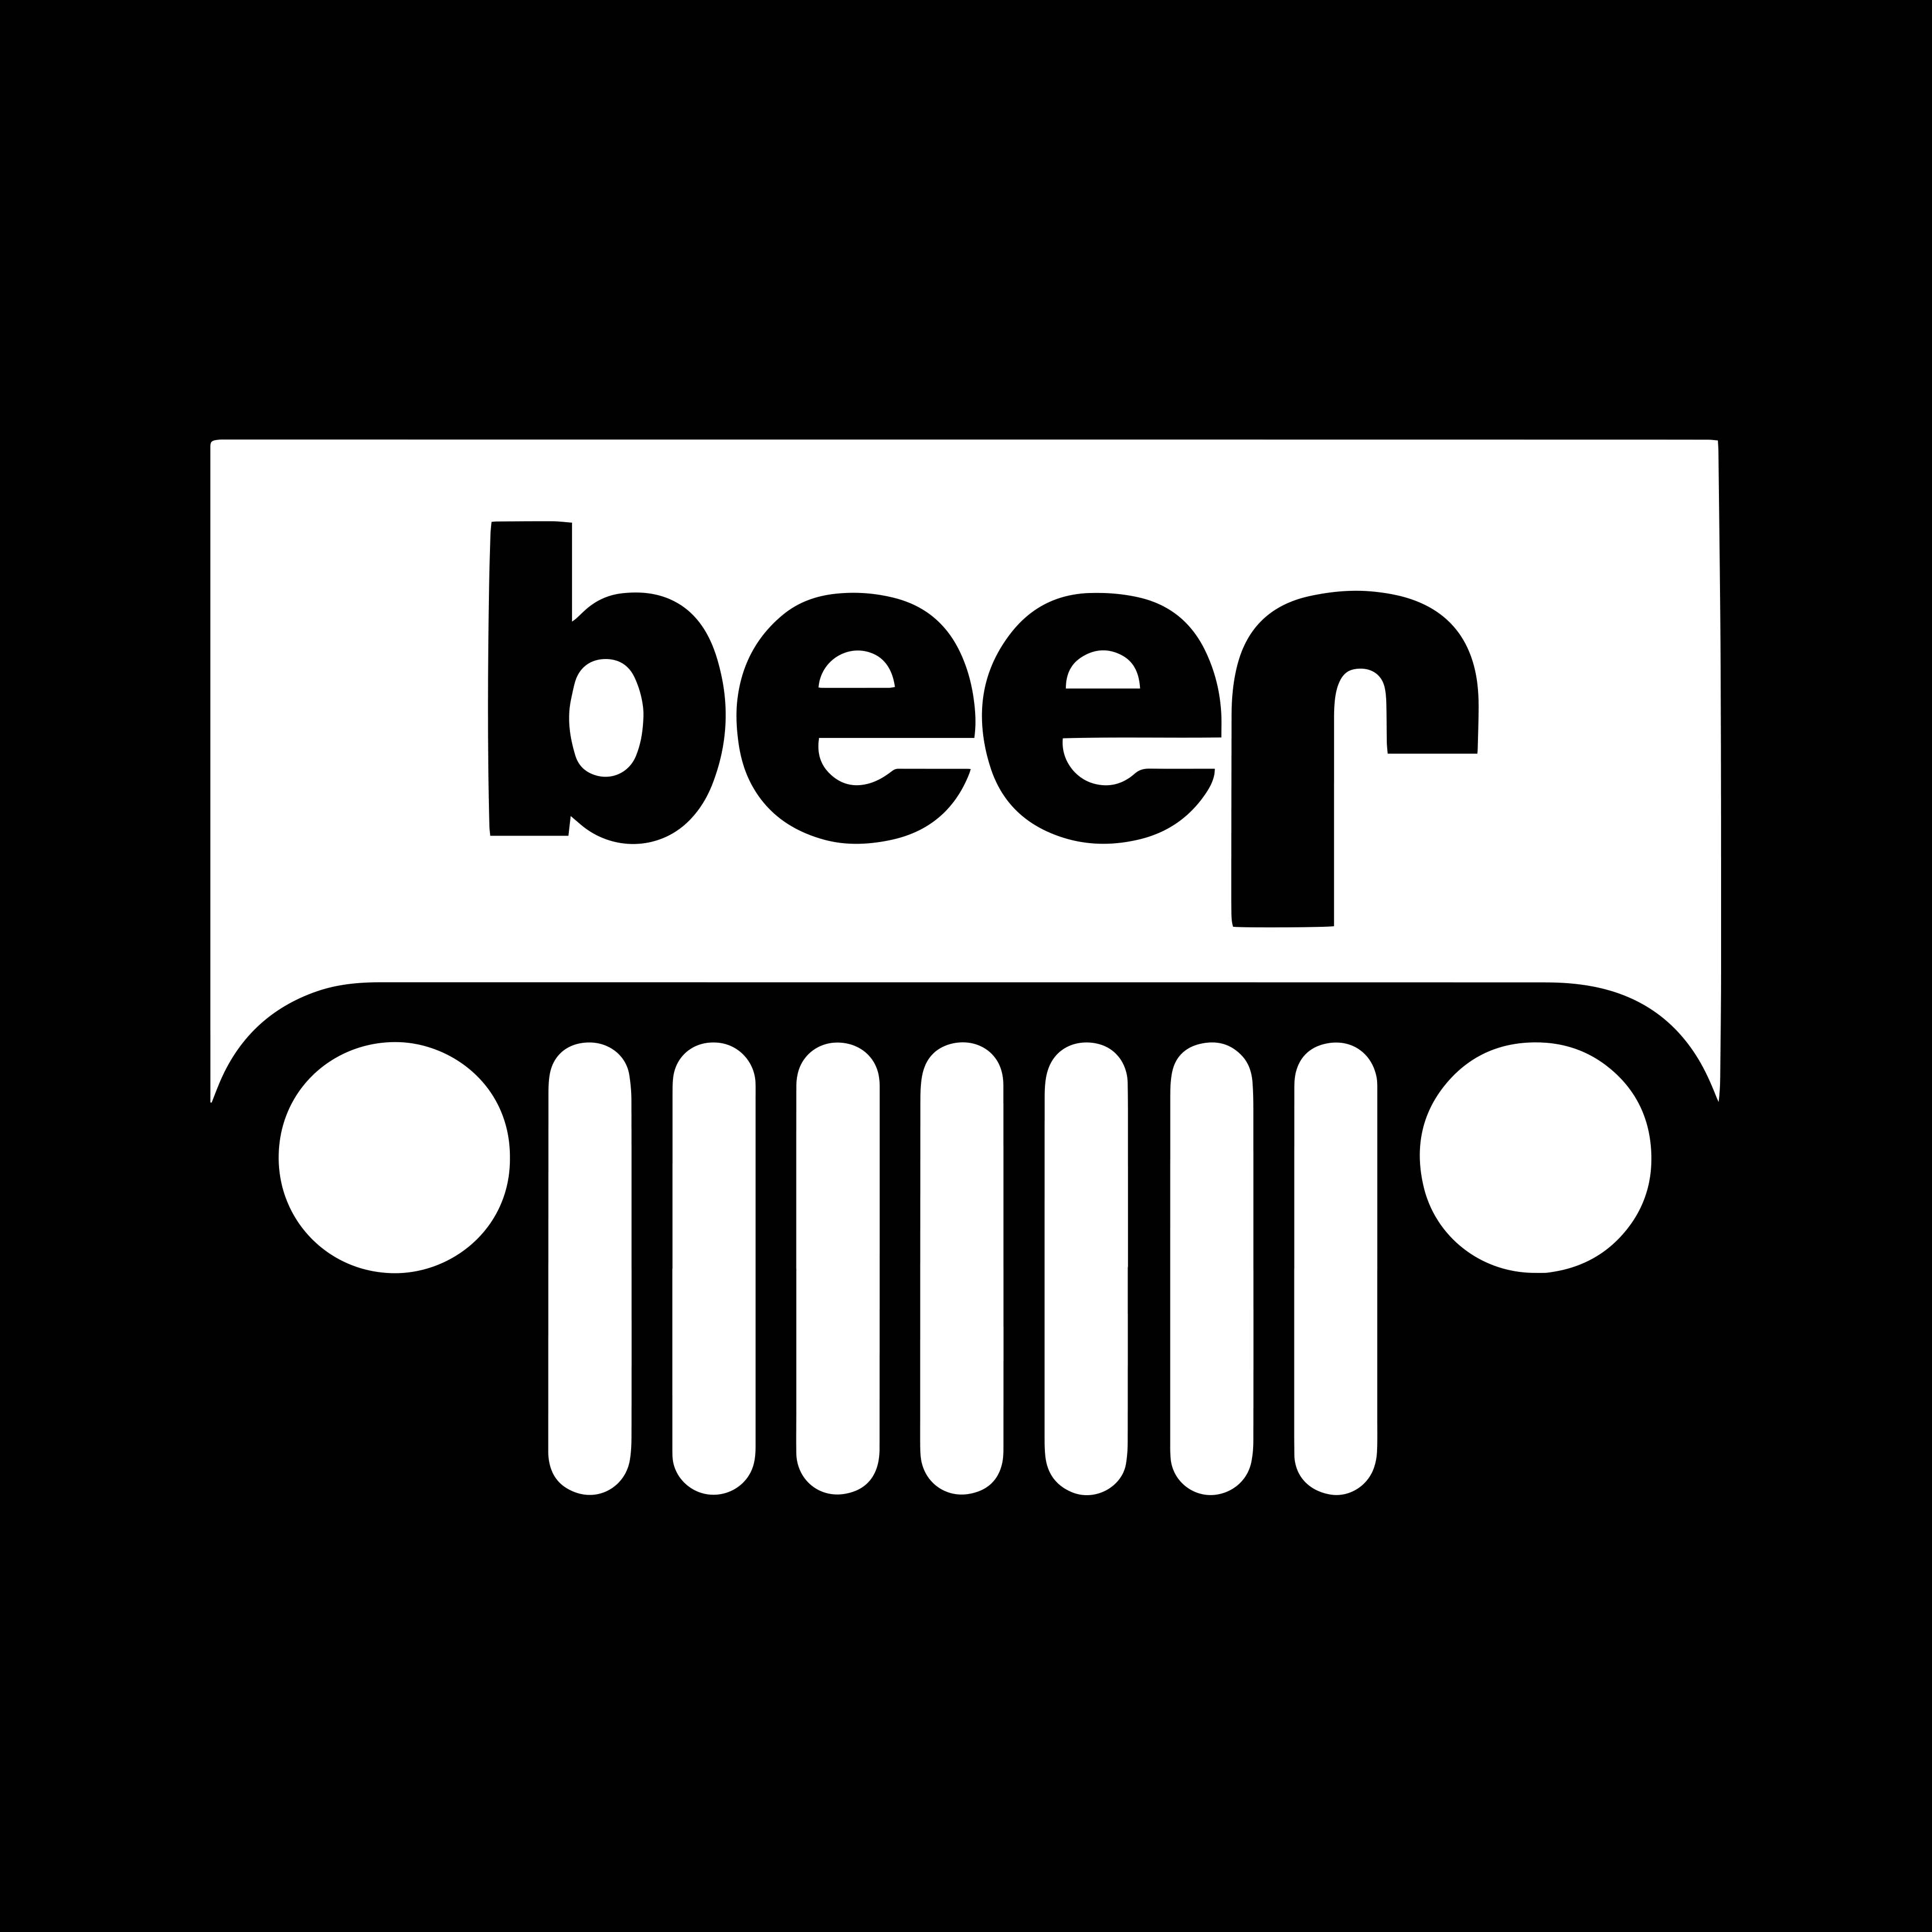 Jeep Beer Logos